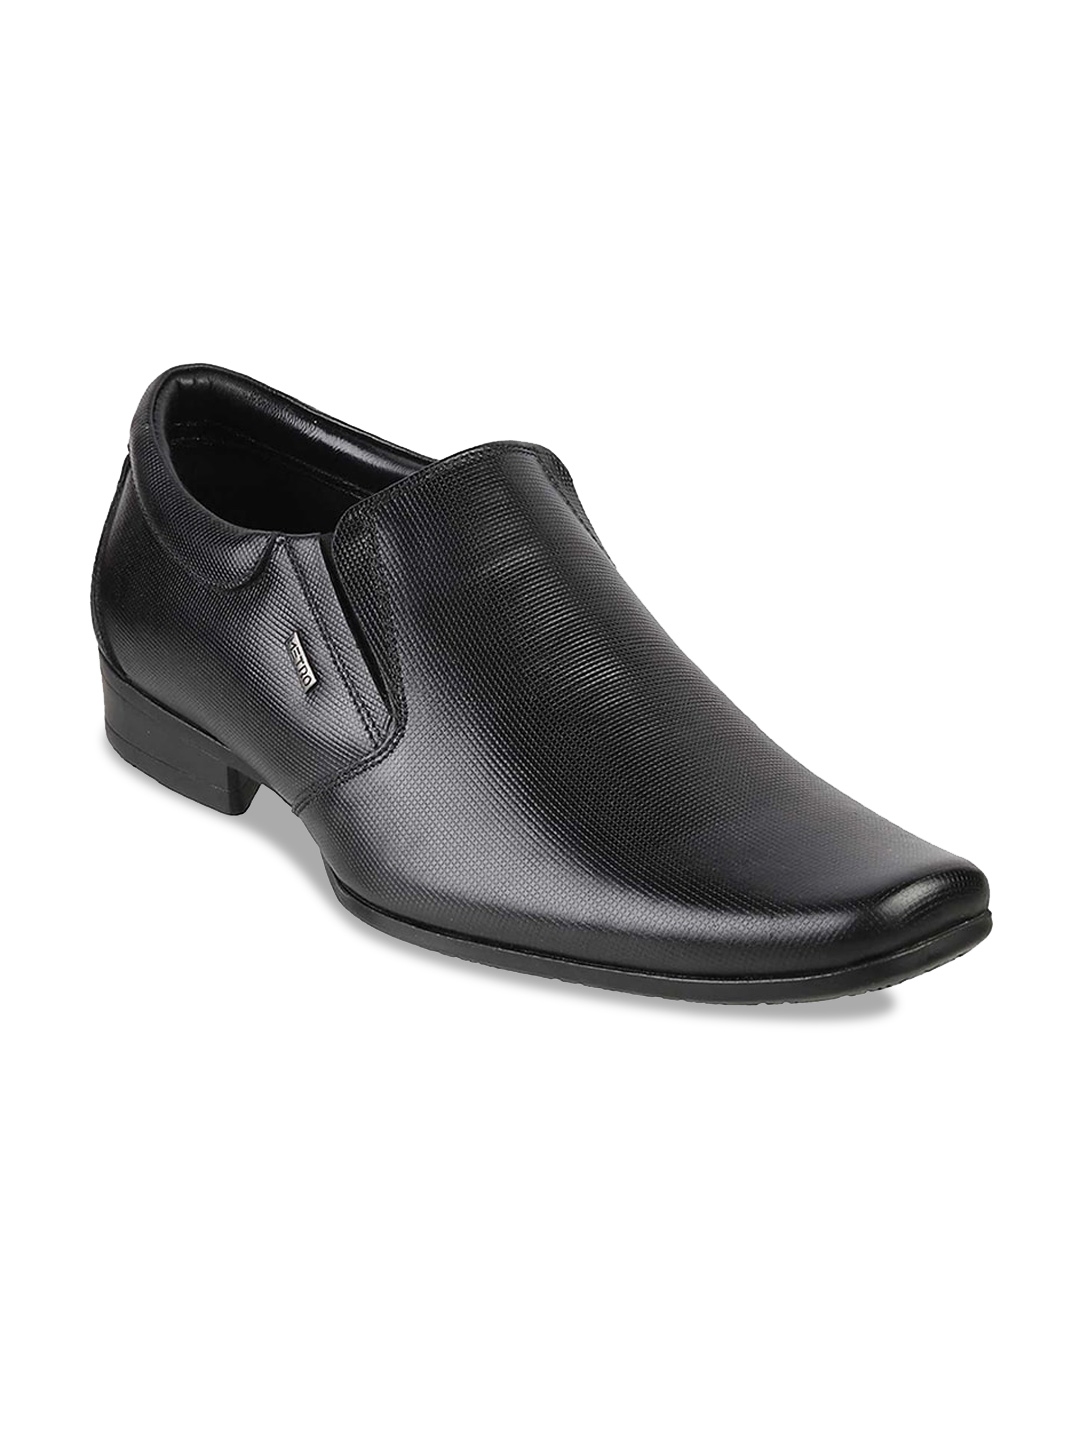 Buy Metro Men Black Textured Formal Leather Slip On Shoes - Formal ...